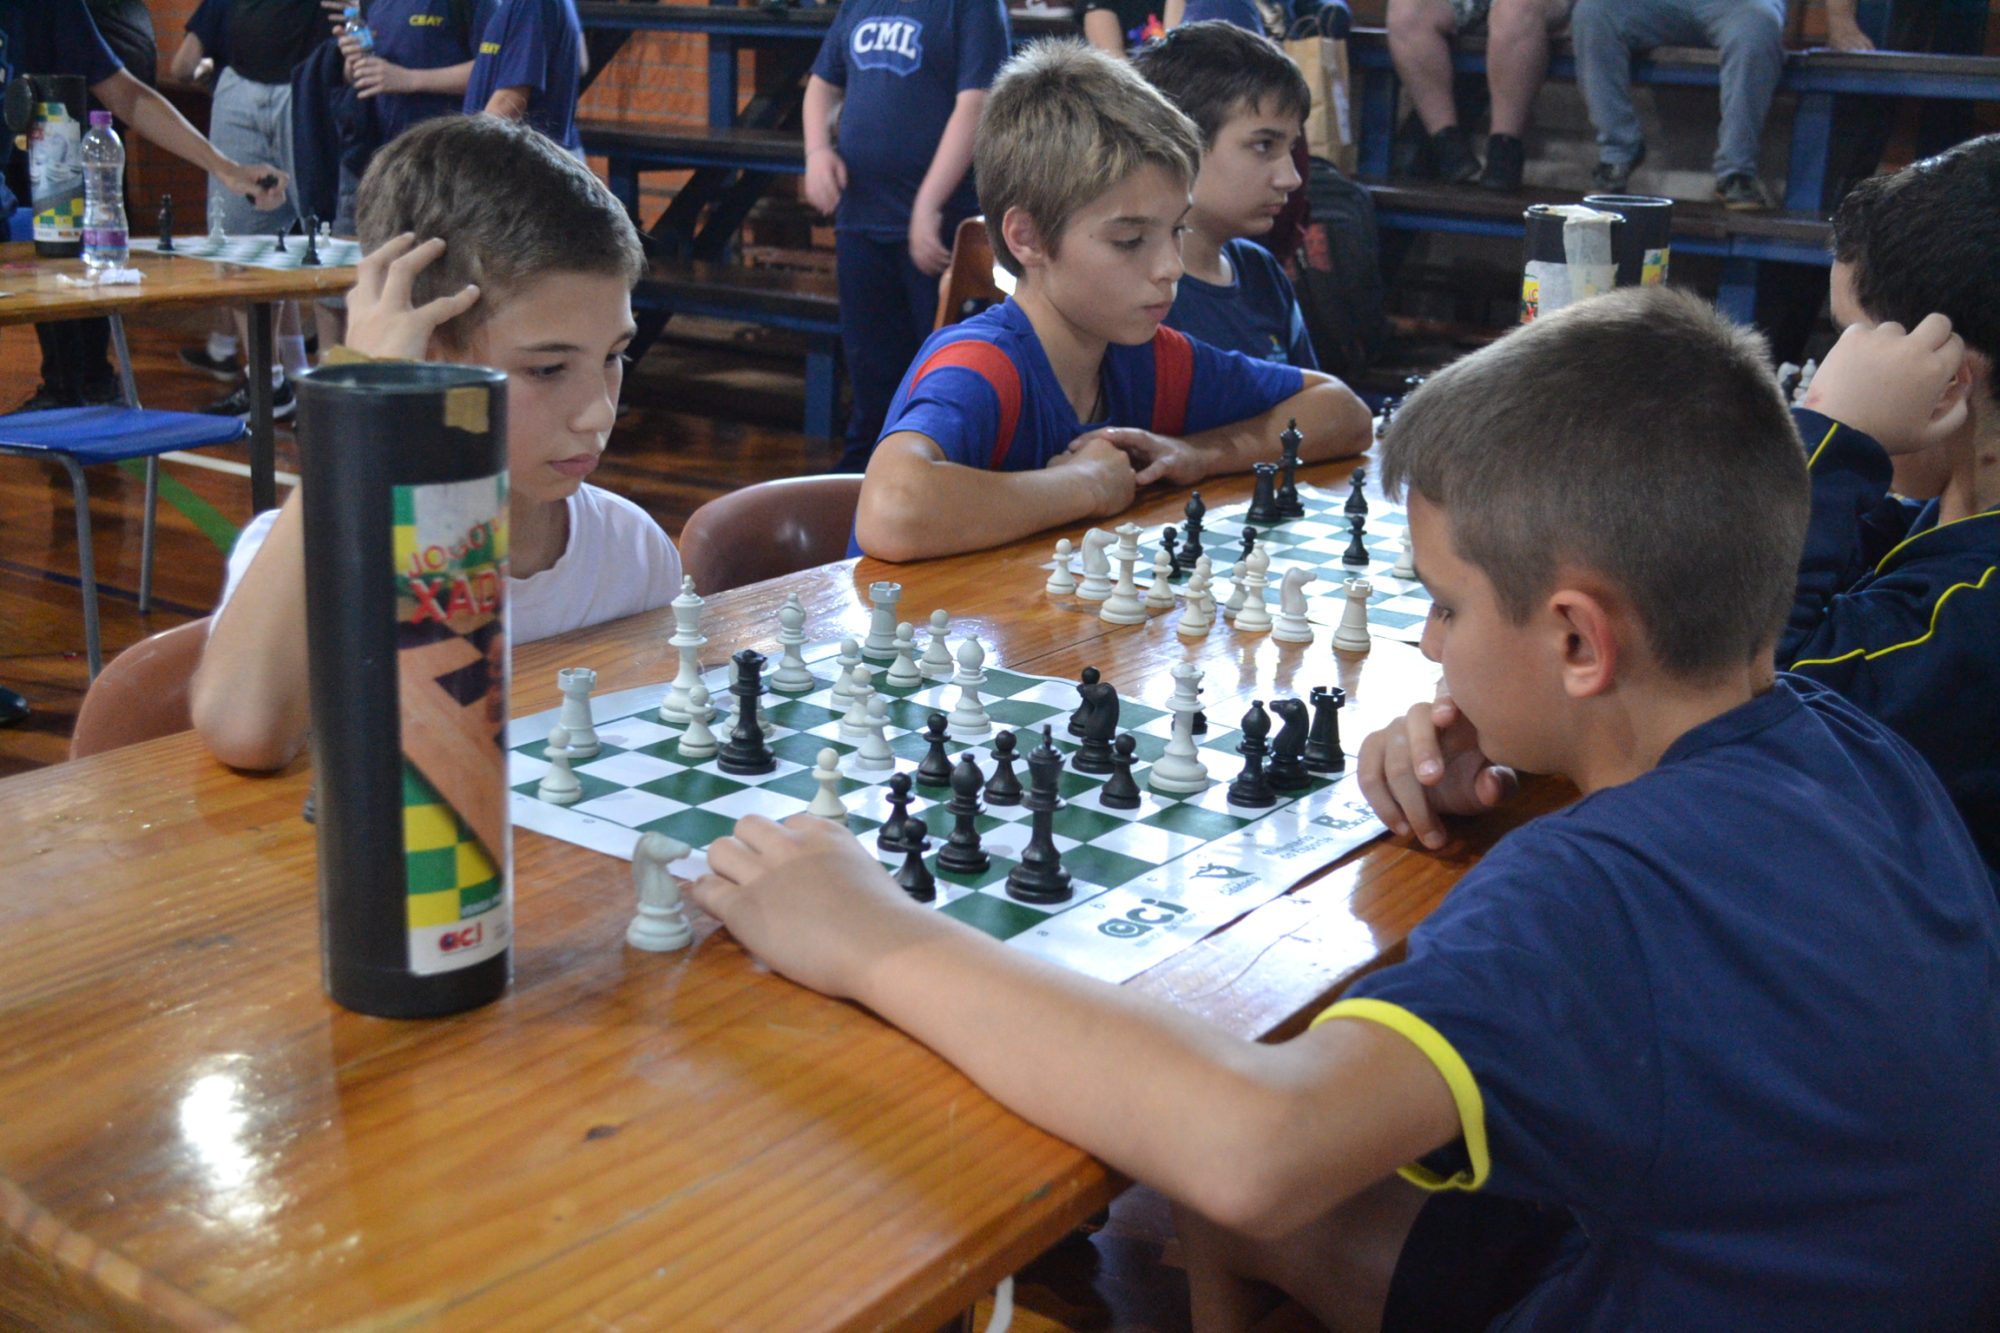 Campeonato de xadrez reunirá 1,5 mil alunos no Pacaembu - 25/06/2013 -  Folhinha - Folha de S.Paulo